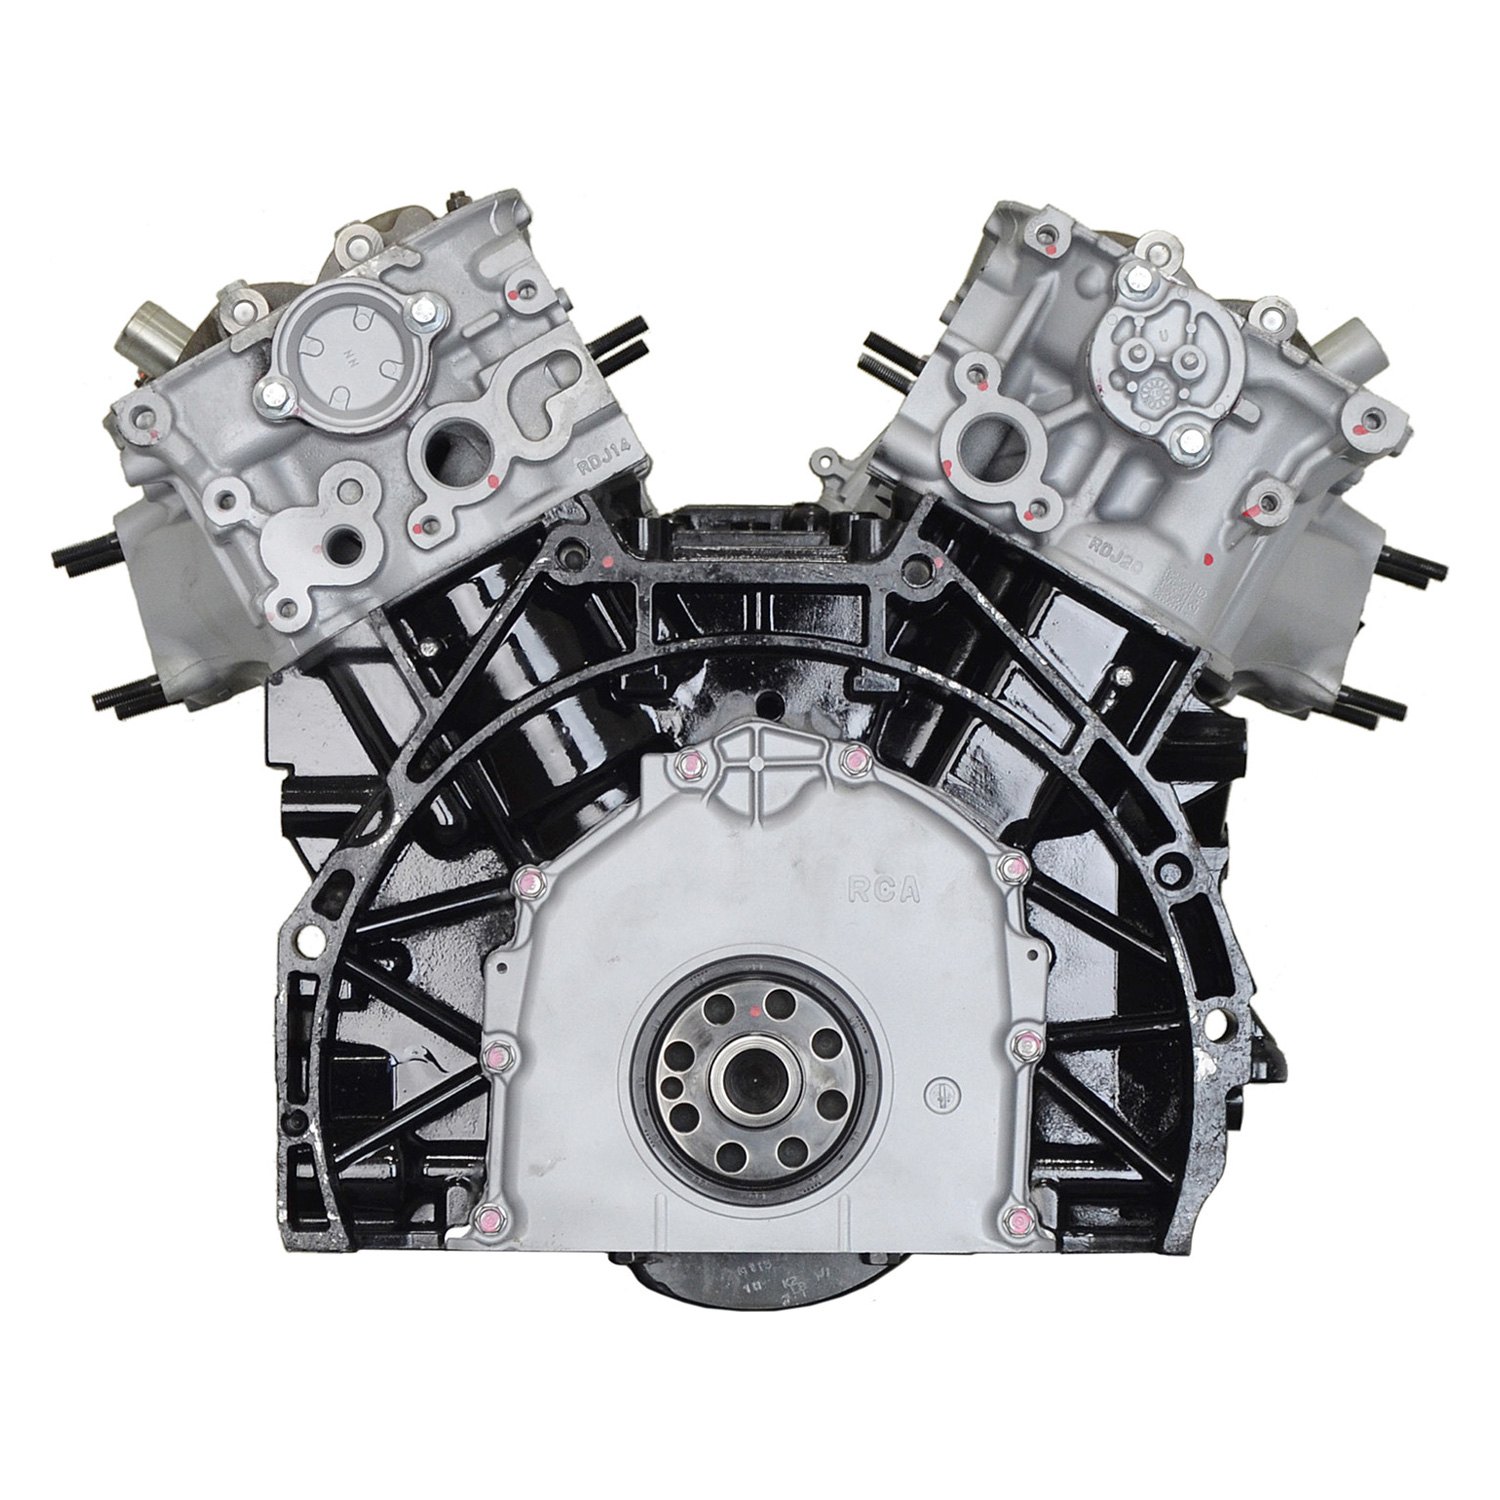 Ремонт двигателя pdf. J35a двигатель. ДВС JT 3. Двигатель j100g. Xuh37350rk0000010 двигатель.